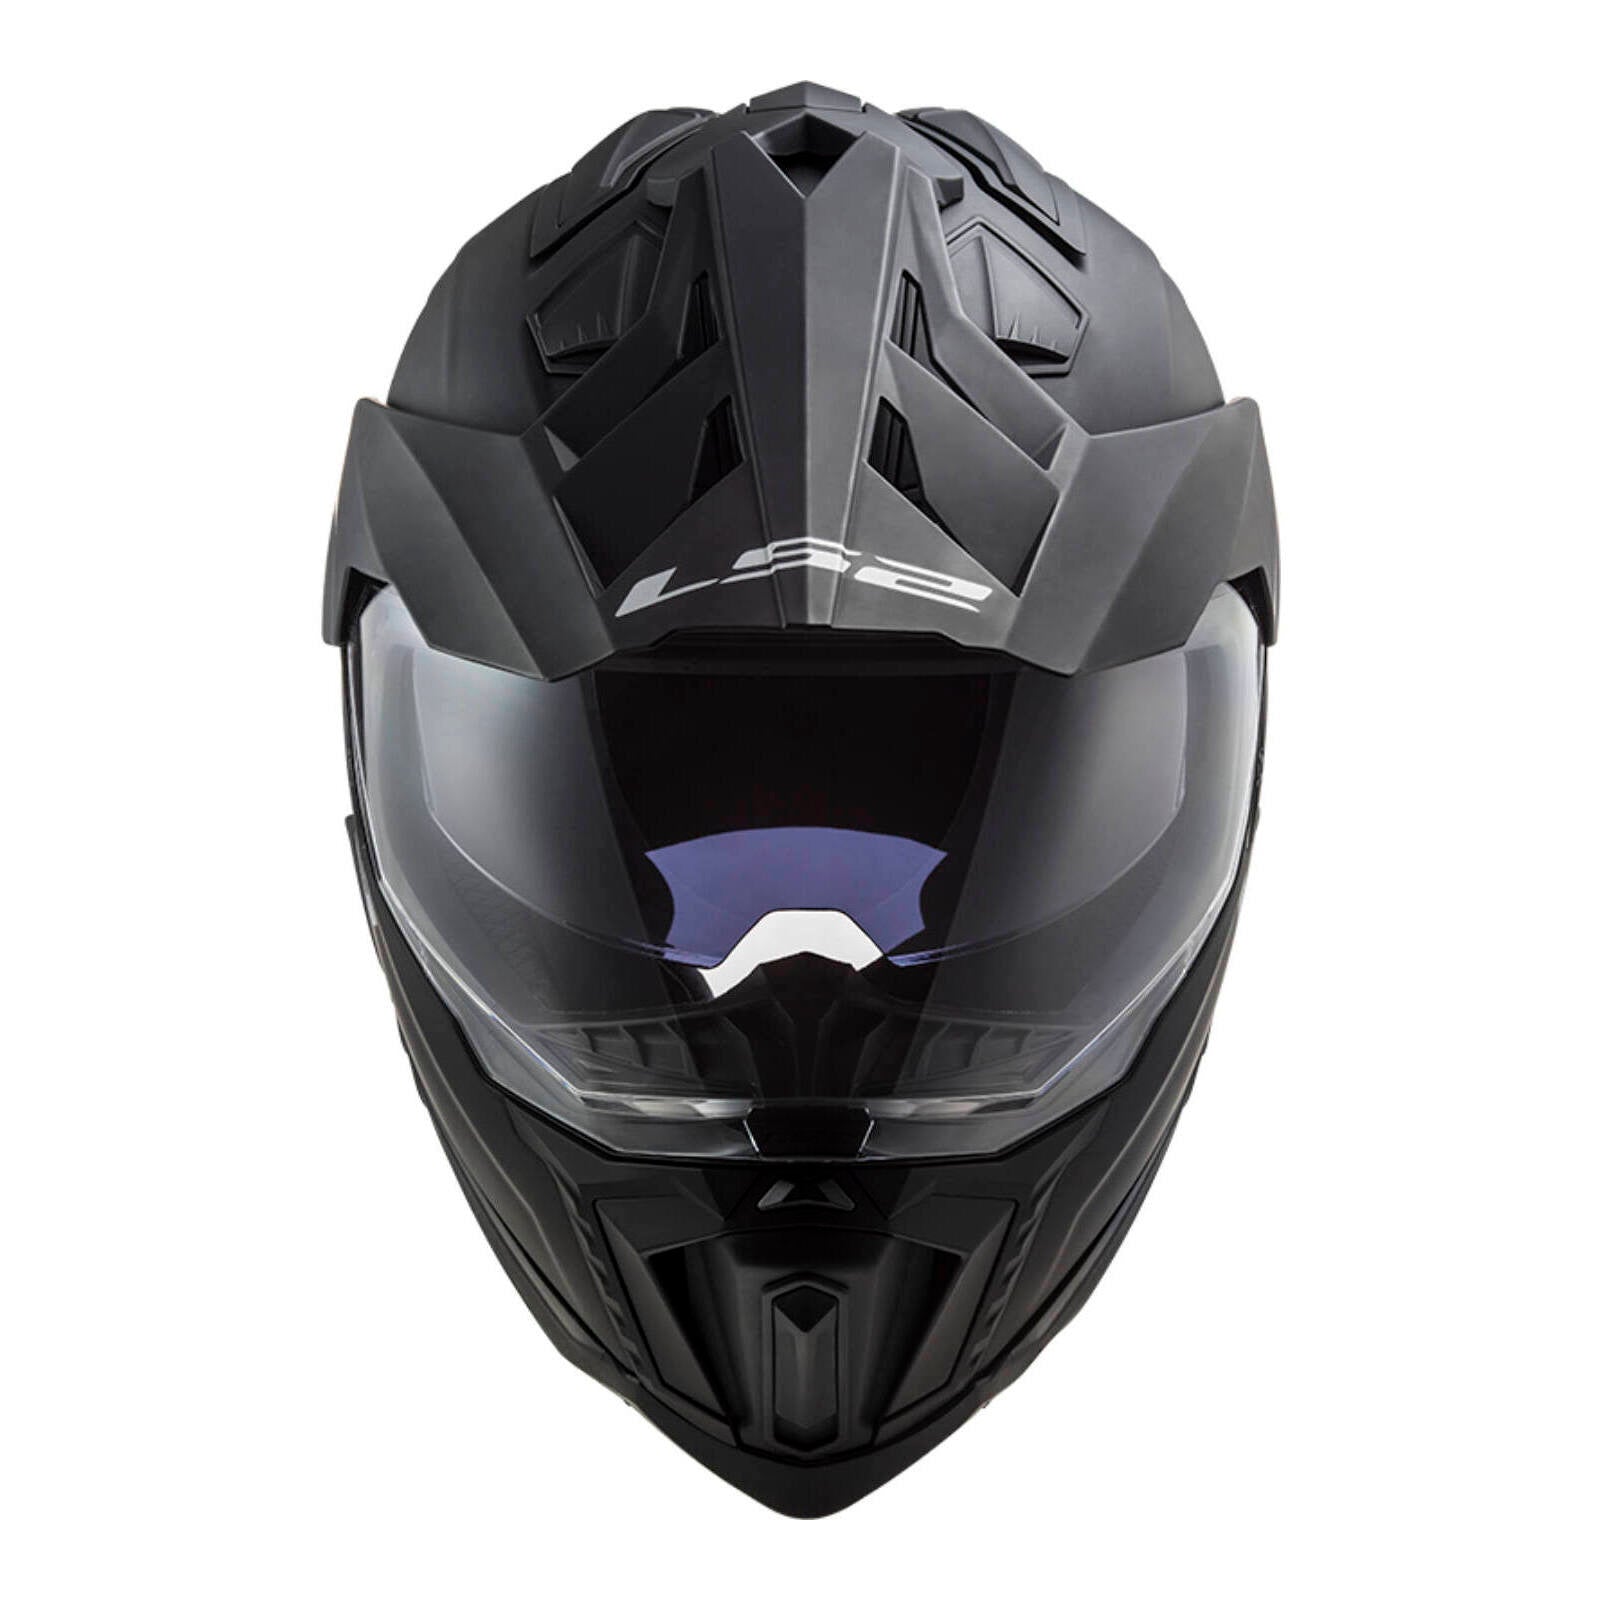 LS2 MX701 Explorer Solid Helmet HPFC Matte Black